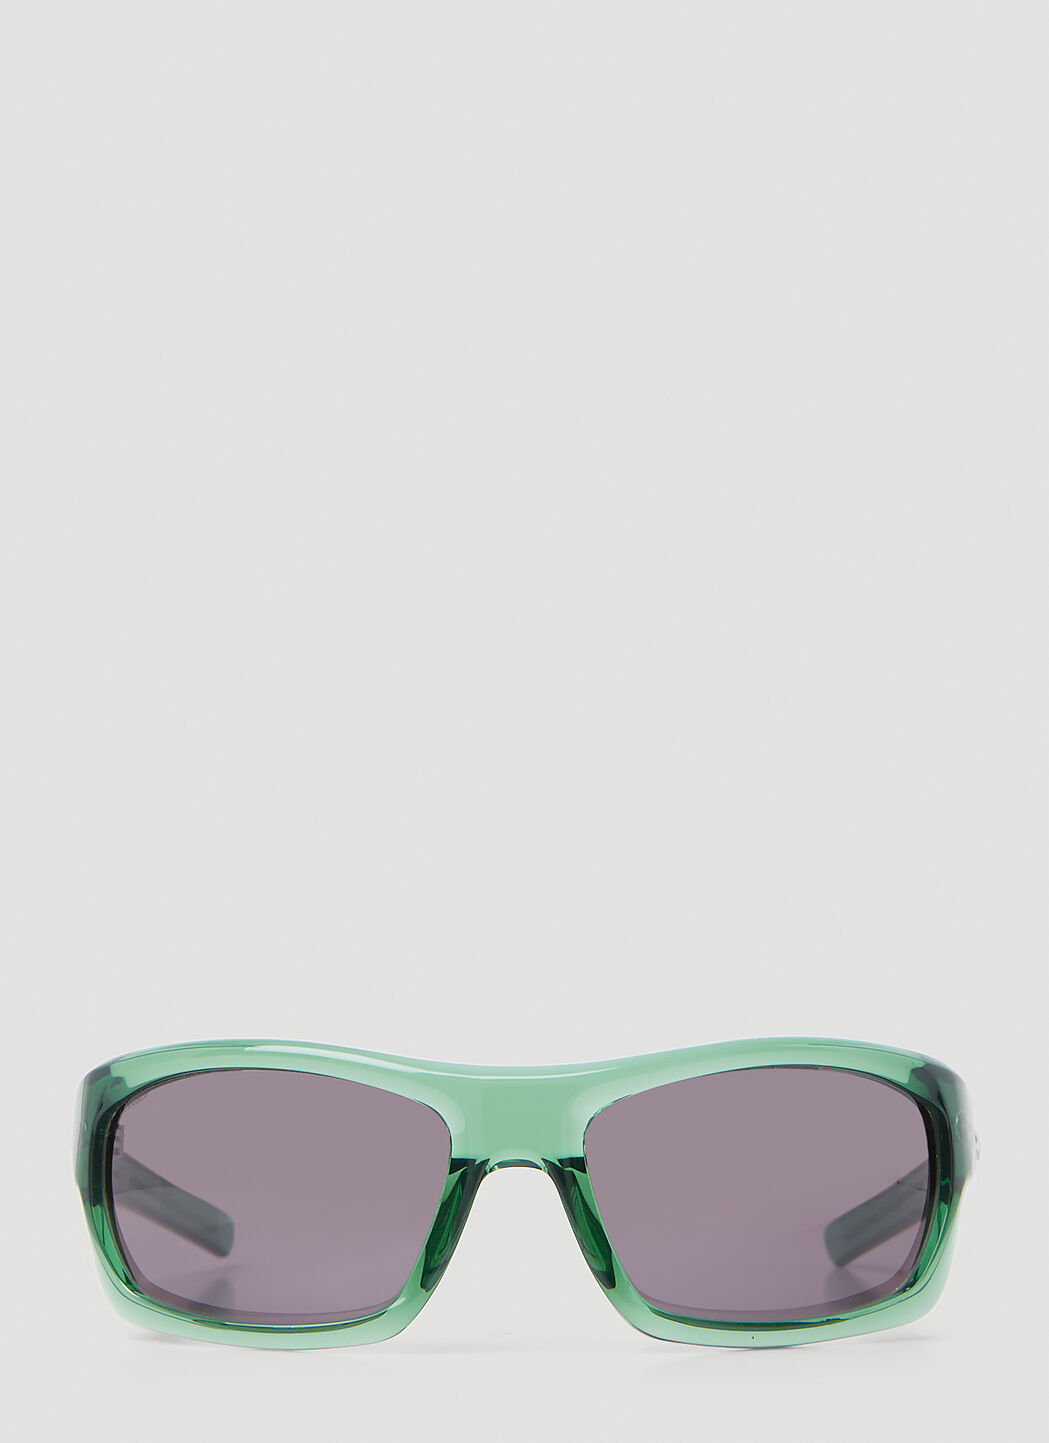 Lexxola Neo Sunglasses ブラック lxx0353006